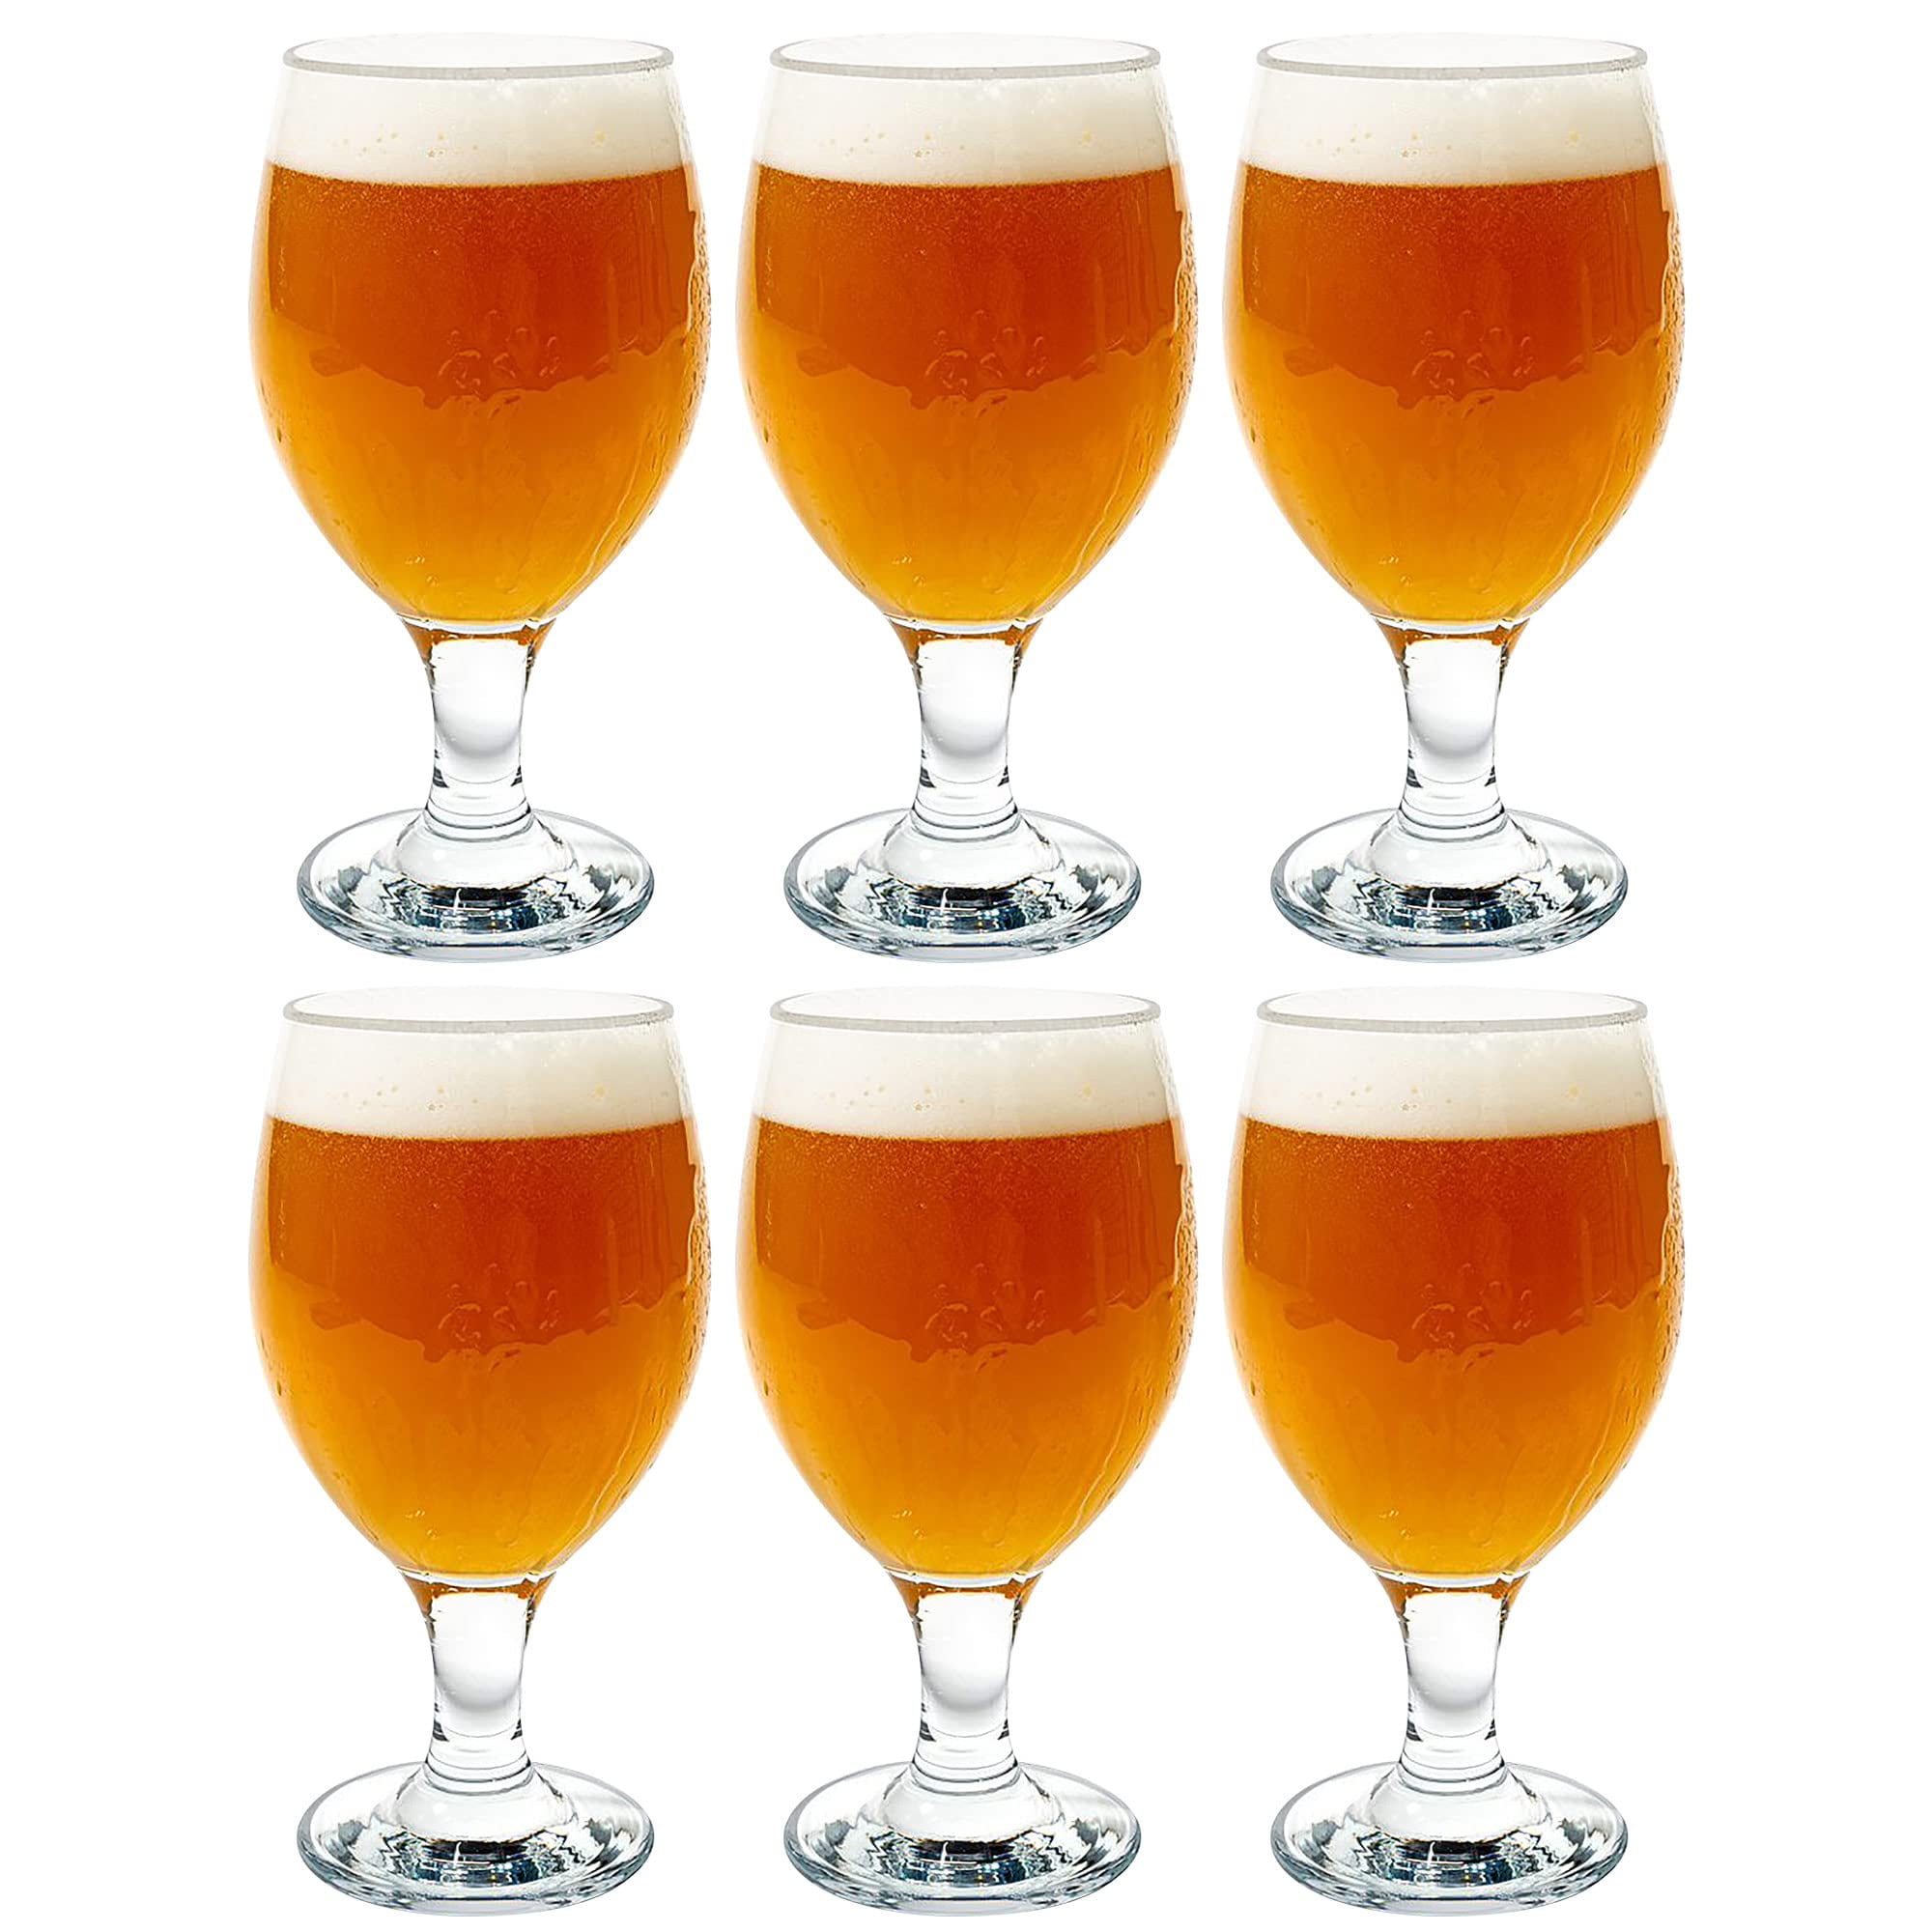 Vikko Beer Mug, Set of 4 Glass Beer Mugs, 17 Ounce, Dishwasher Safe Durable  Drinking Glass for Craft Brews, Beer or Water